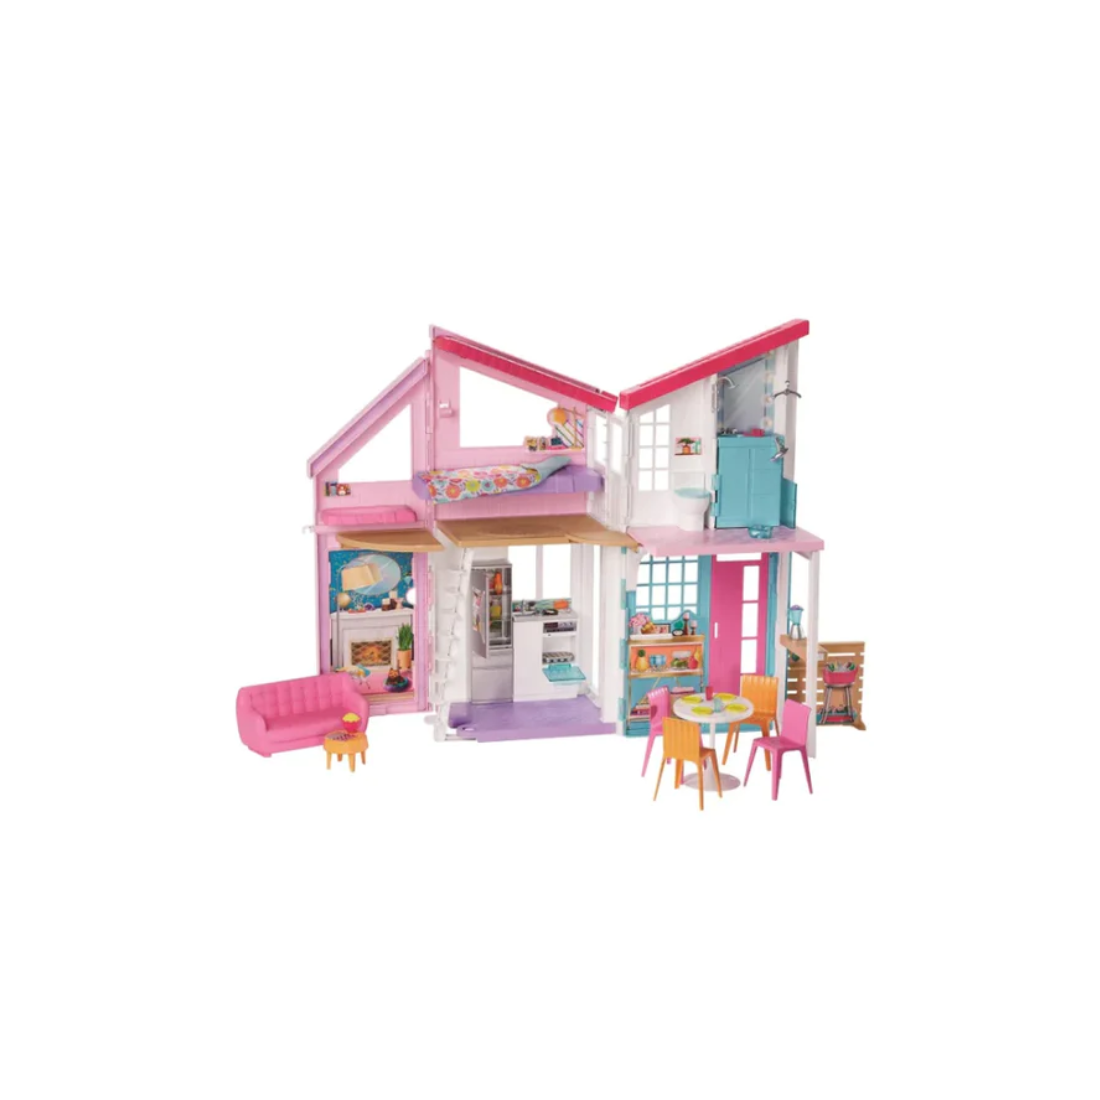 Mattel Barbie Malibu House Doll House